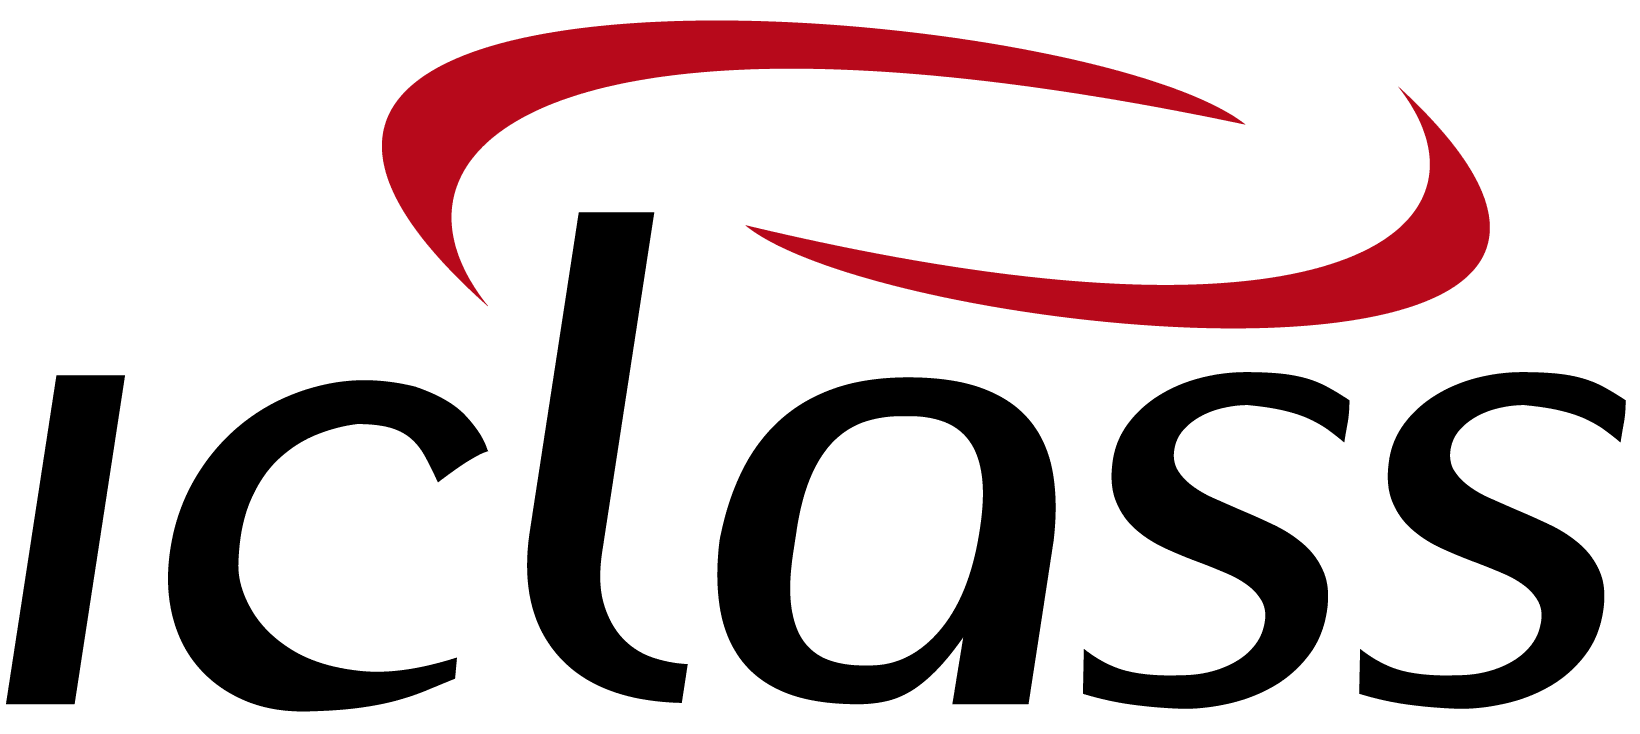 logo IClass Software de Ordem de Serviço Online Mantenimiento de Ascensores